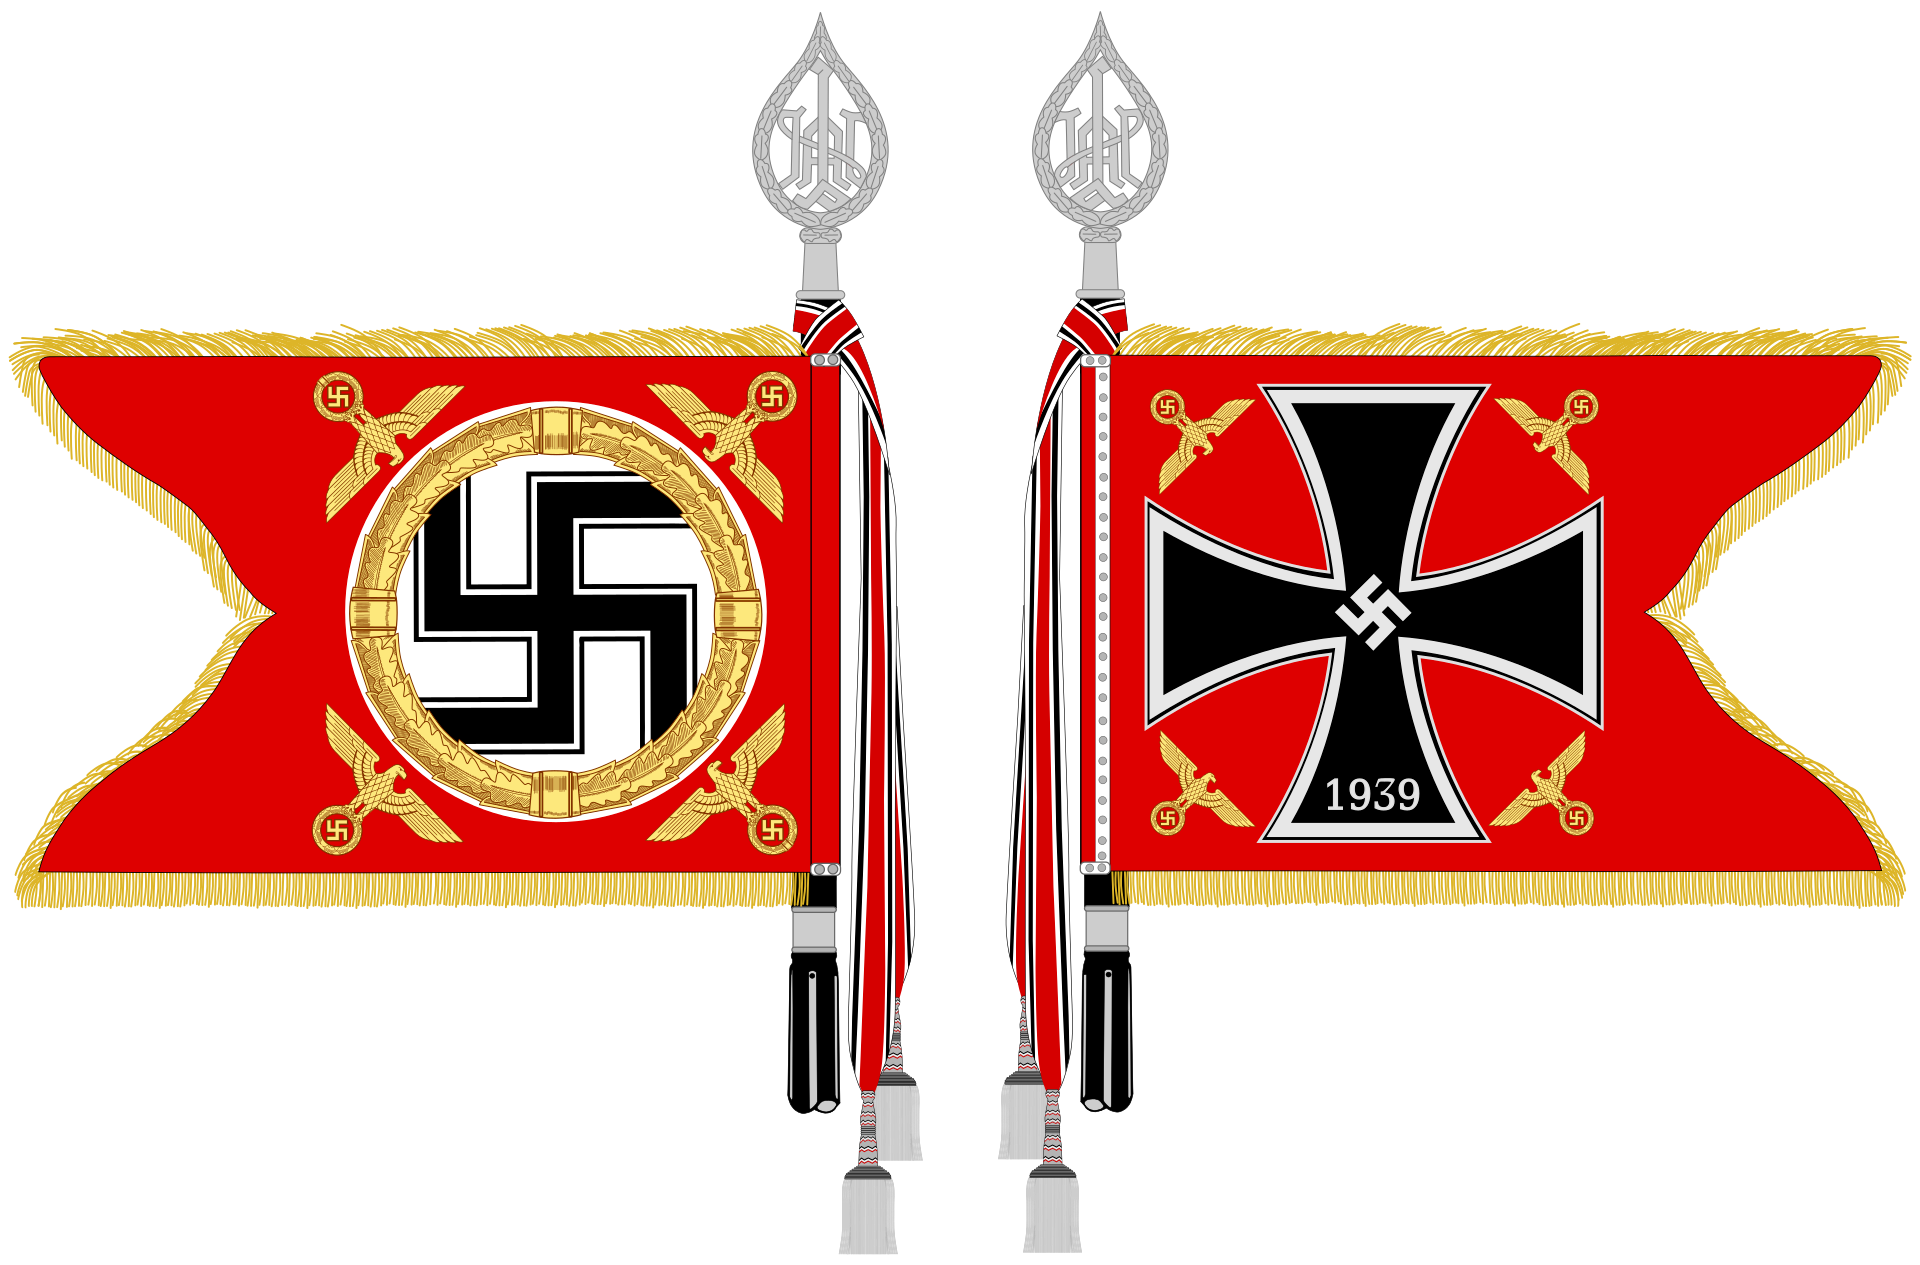 High Quality Division of the Waffen-SS ²Leibstandarte Adolf Hitler" (LSSAH), Blank Meme Template